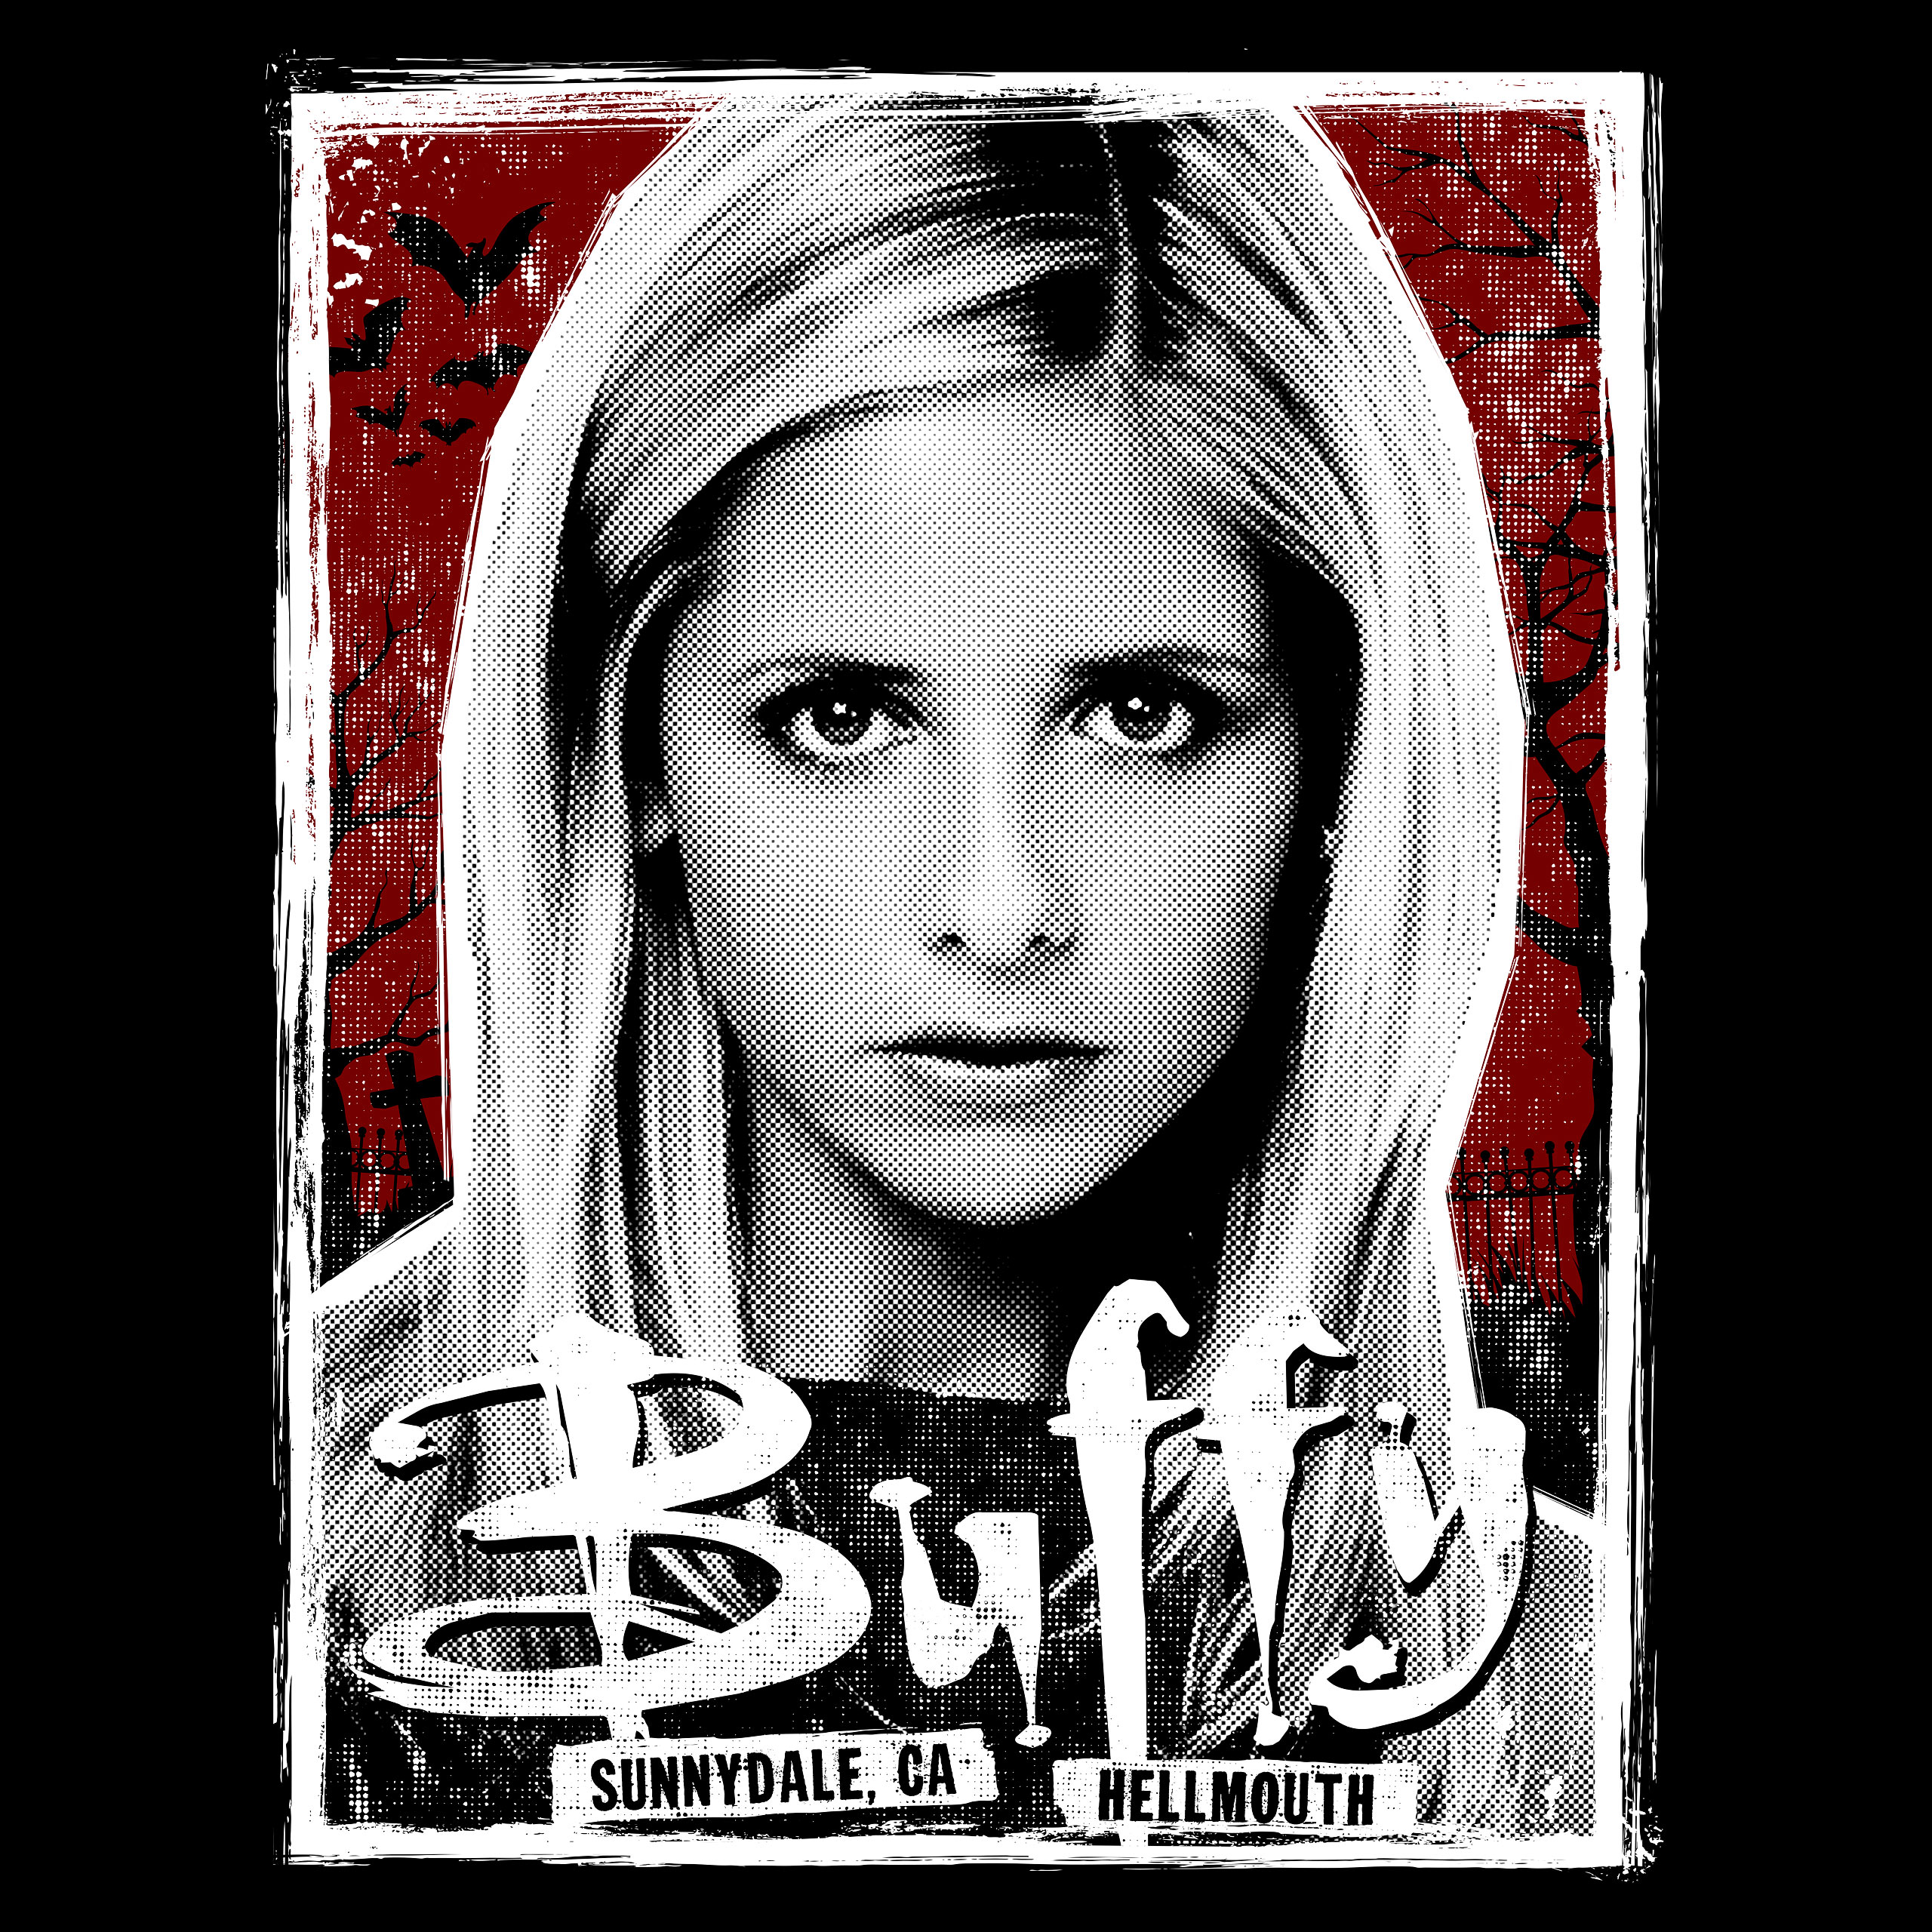 Vampierjager T-shirt voor Buffy fans Zwart